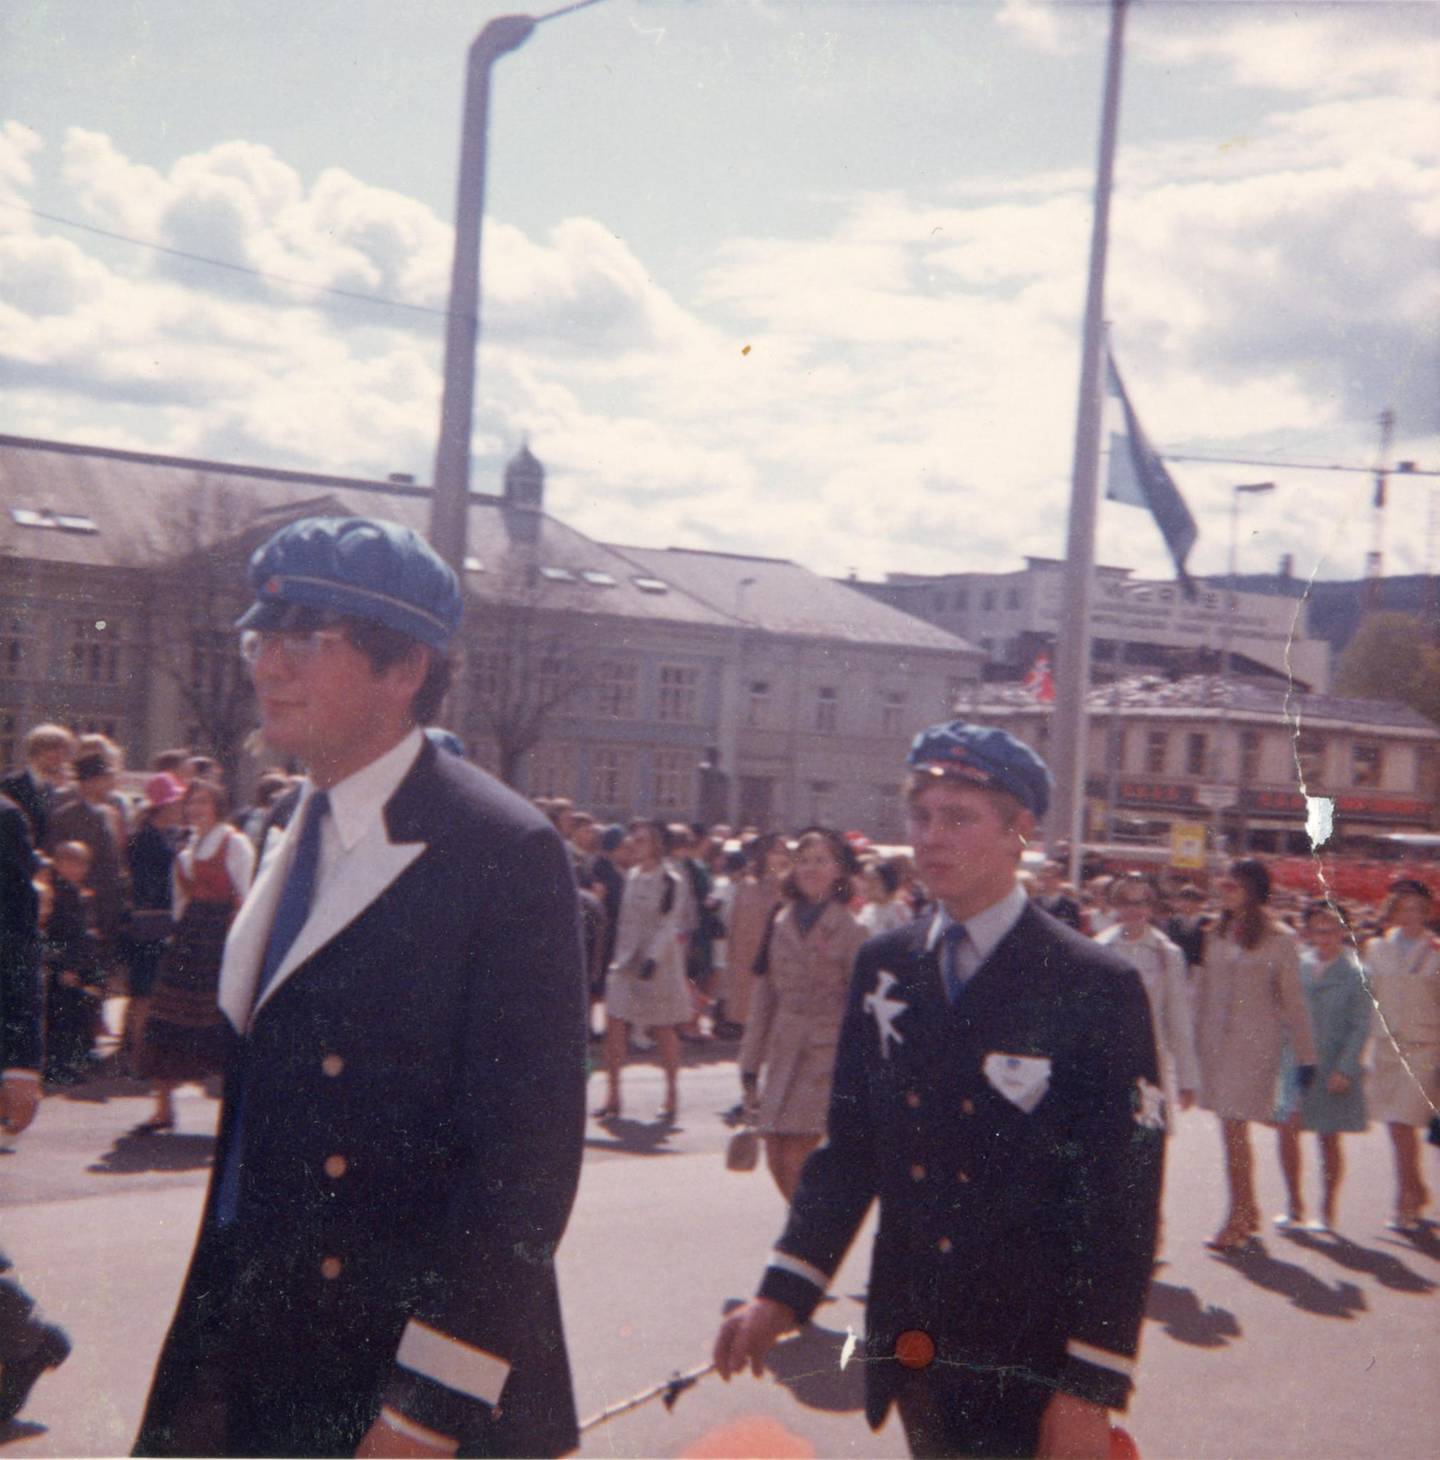 Nils var redaktør av russeavisa ved Drammen gymnas i 1969. Her i russetoget over Strømsø torg 17. mai. Drammen byarkiv. Foto: Felix Pribyl.